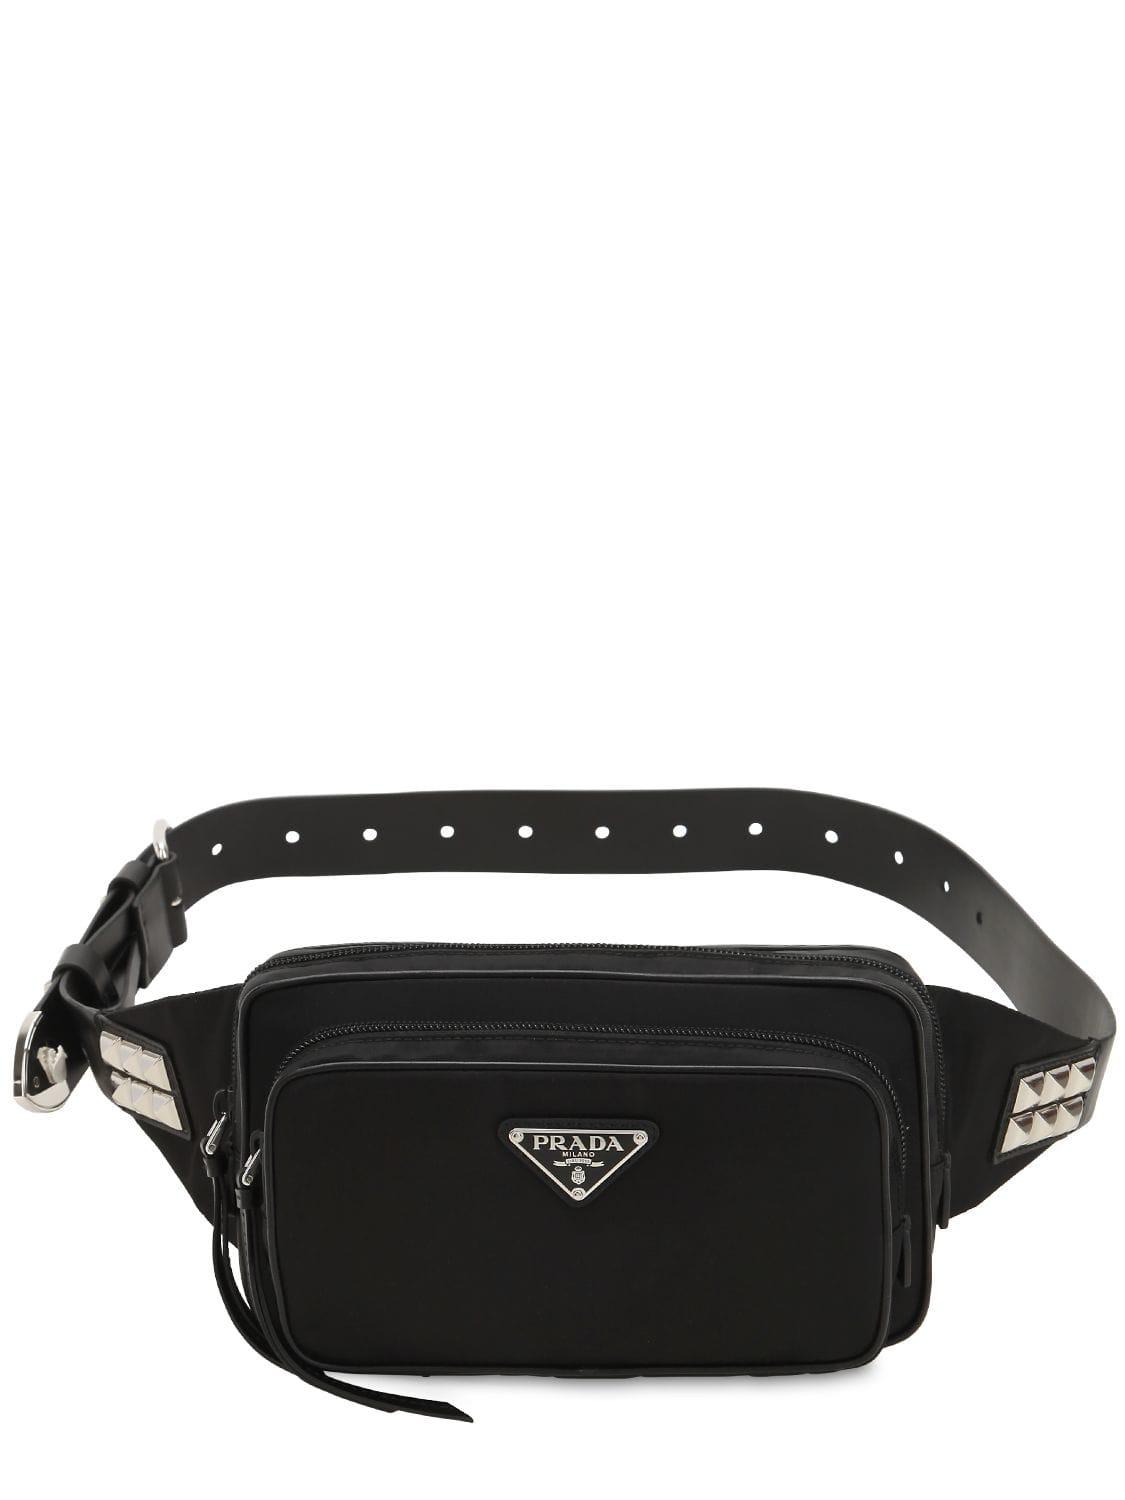 Prada New Vela Nylon Belt Bag W/ Studs in Black | Lyst